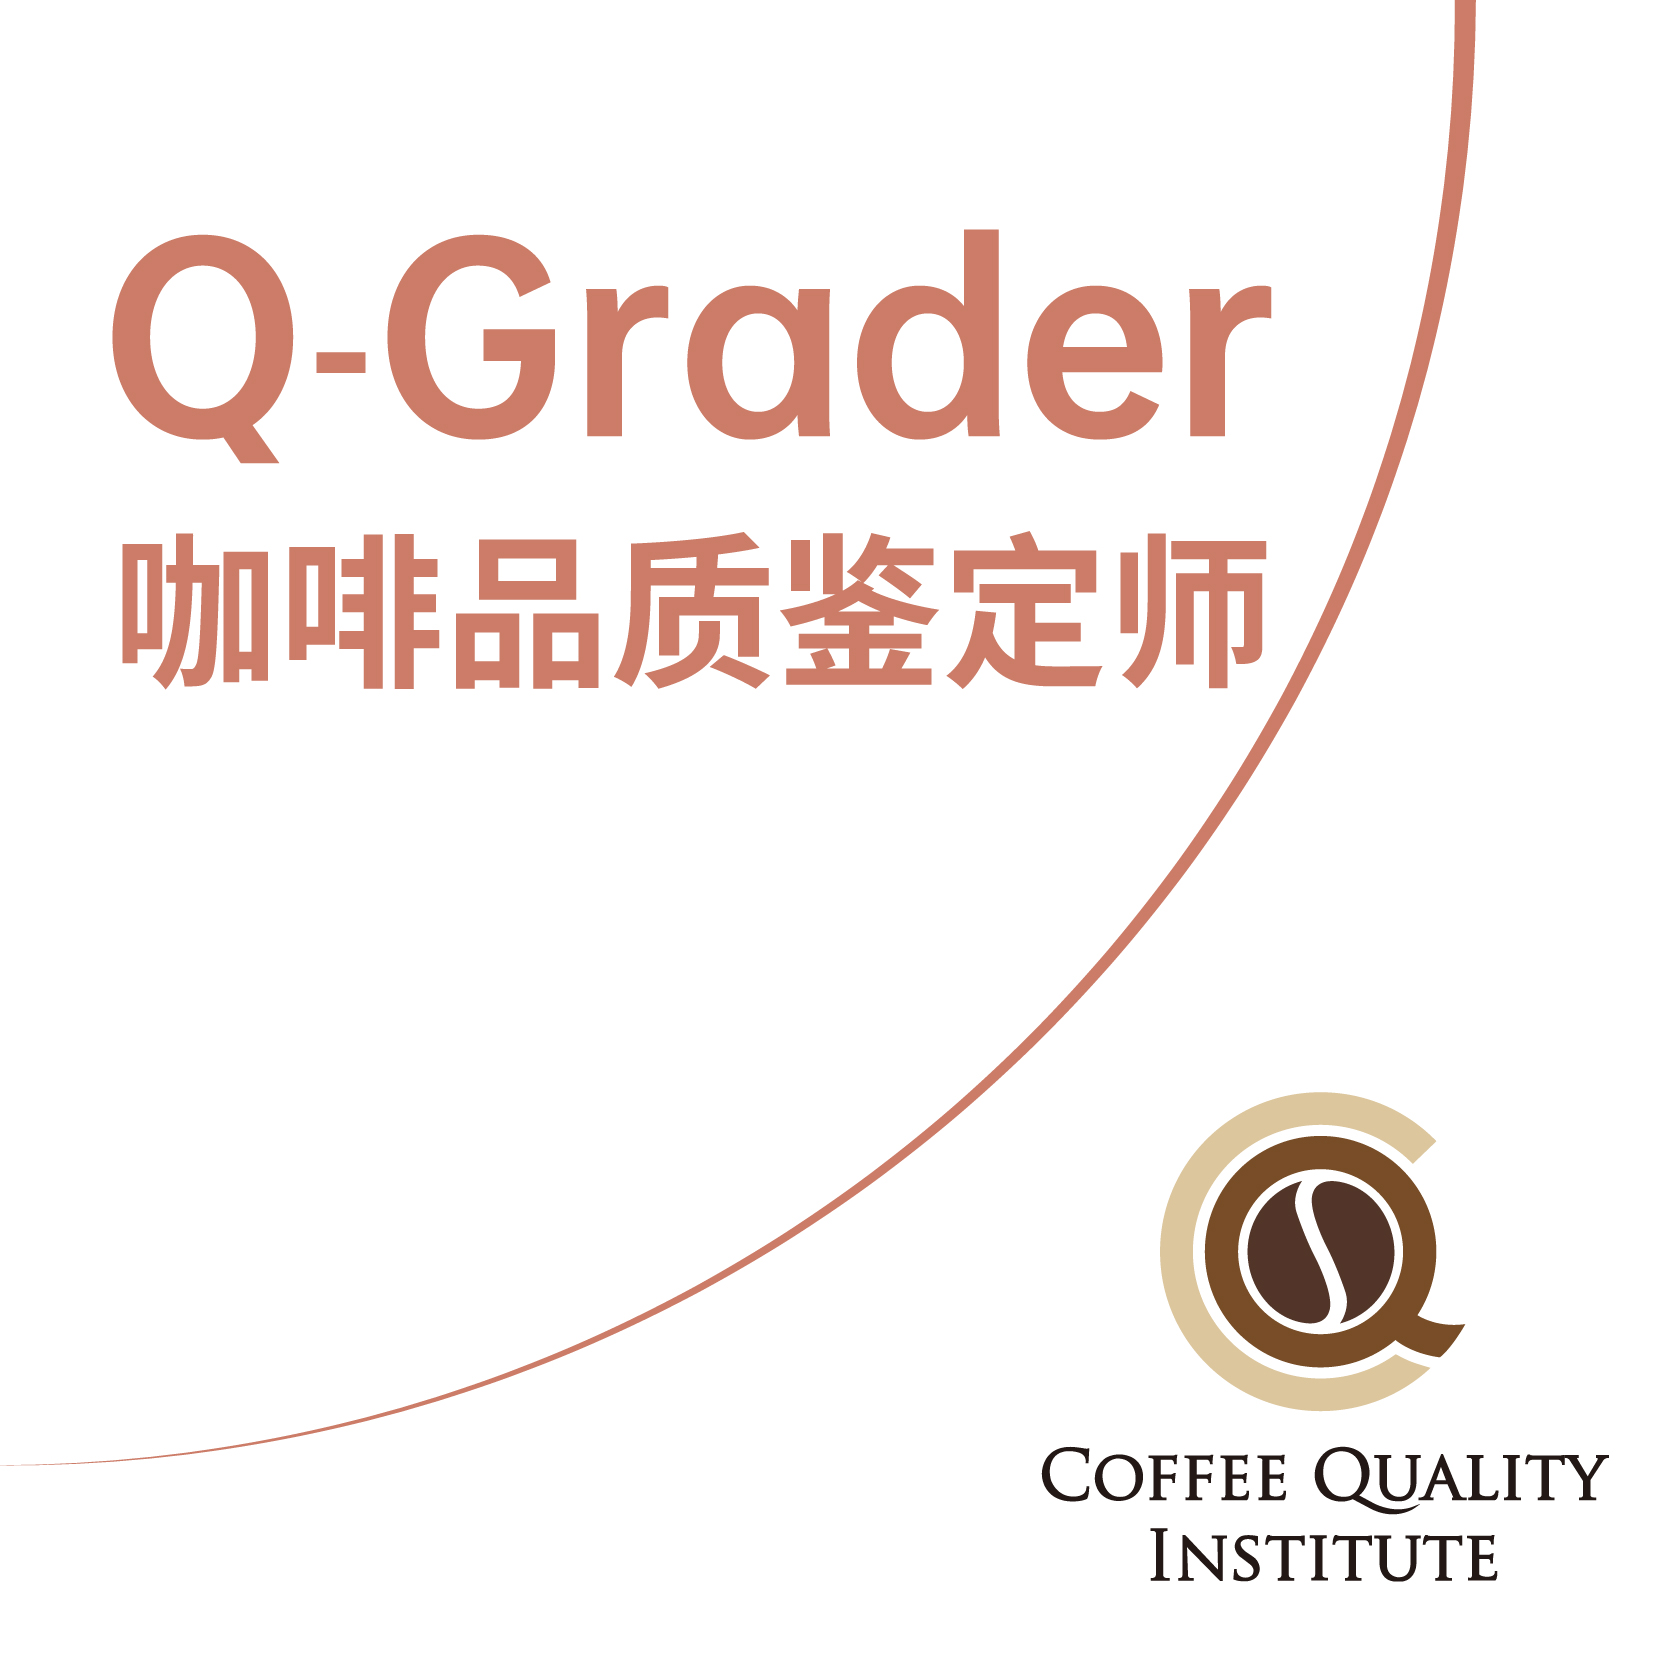 【北京】CQI Q-Grader 国际咖啡品质鉴定师